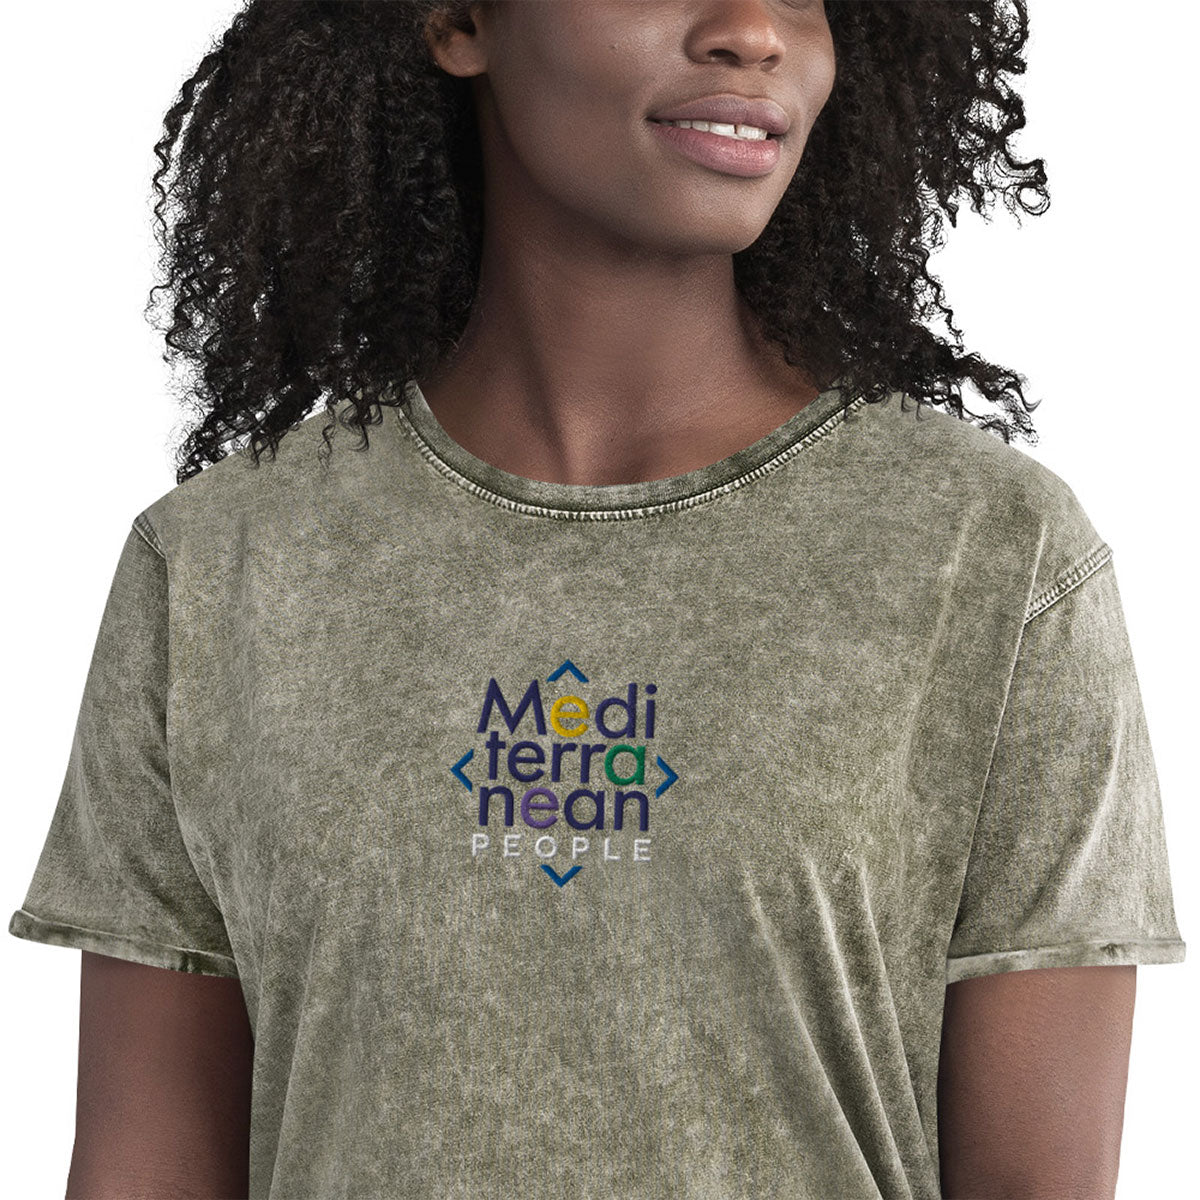 LIKELELE world · Camiseta m/corta·MEDITERRANEAN PEOPLE·Mujer/Unisex · Medium·Dark Army Green-374b2f